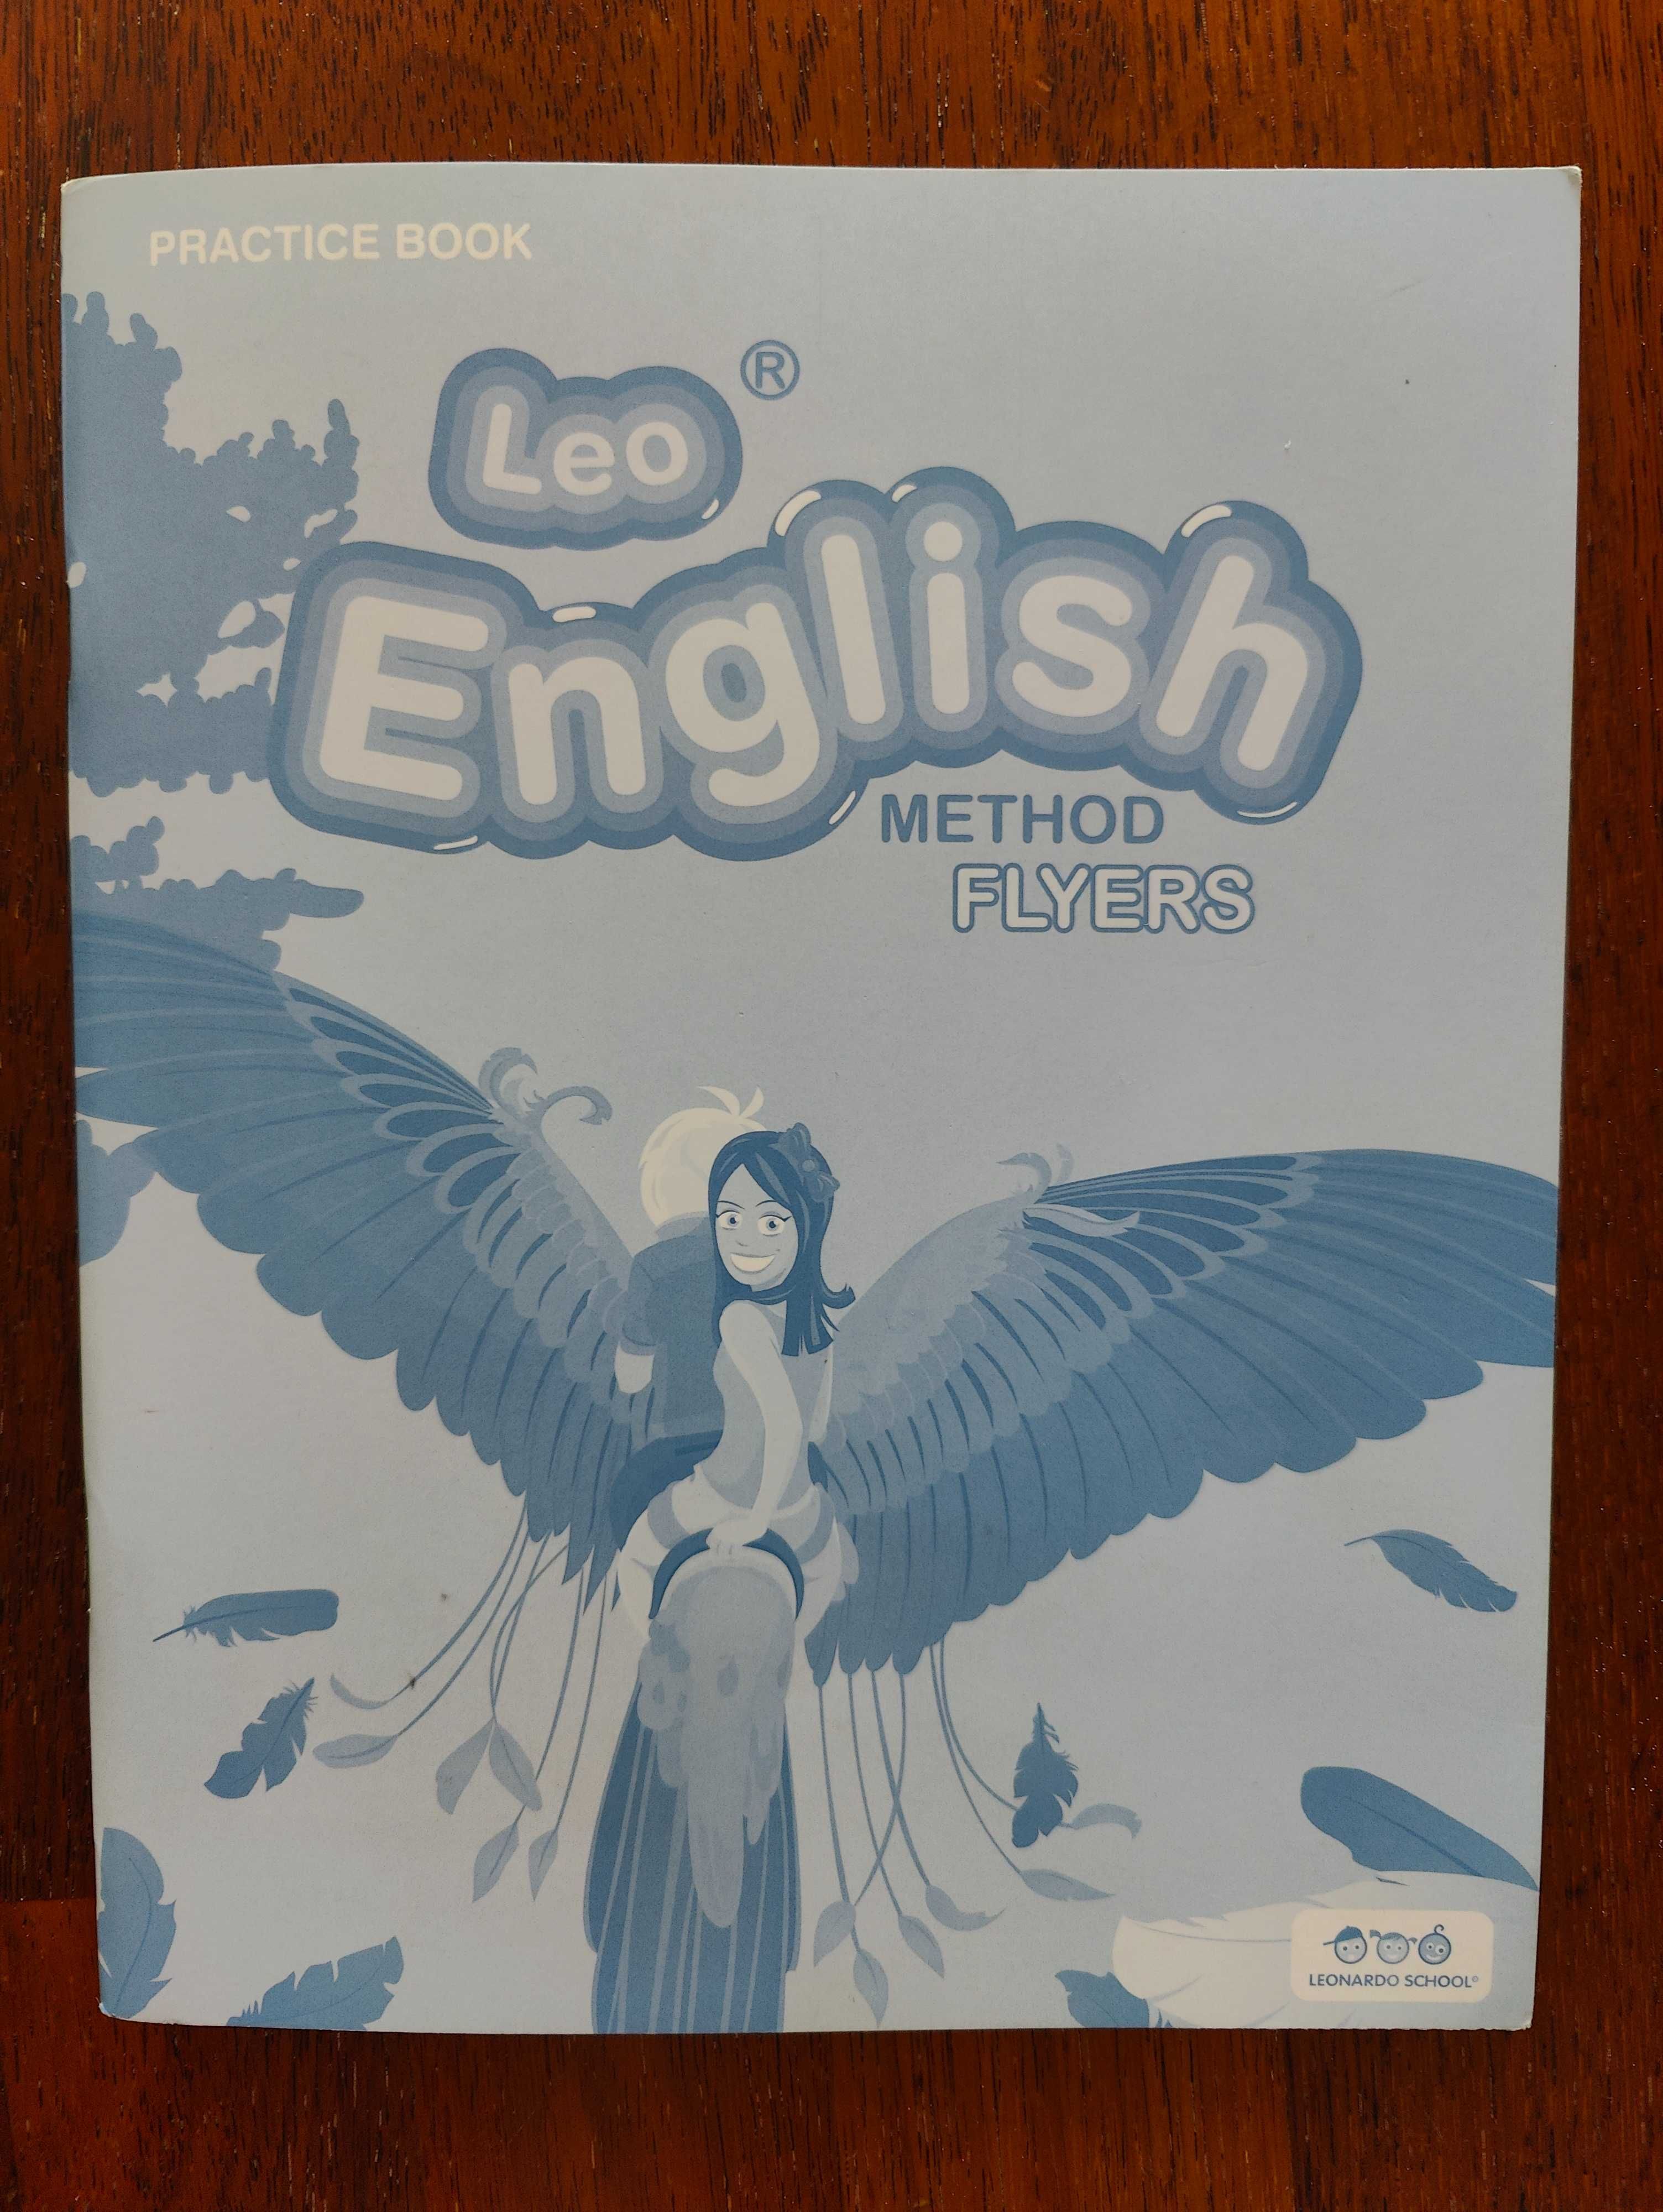 Leo English Method flyers practice book Leonardo school